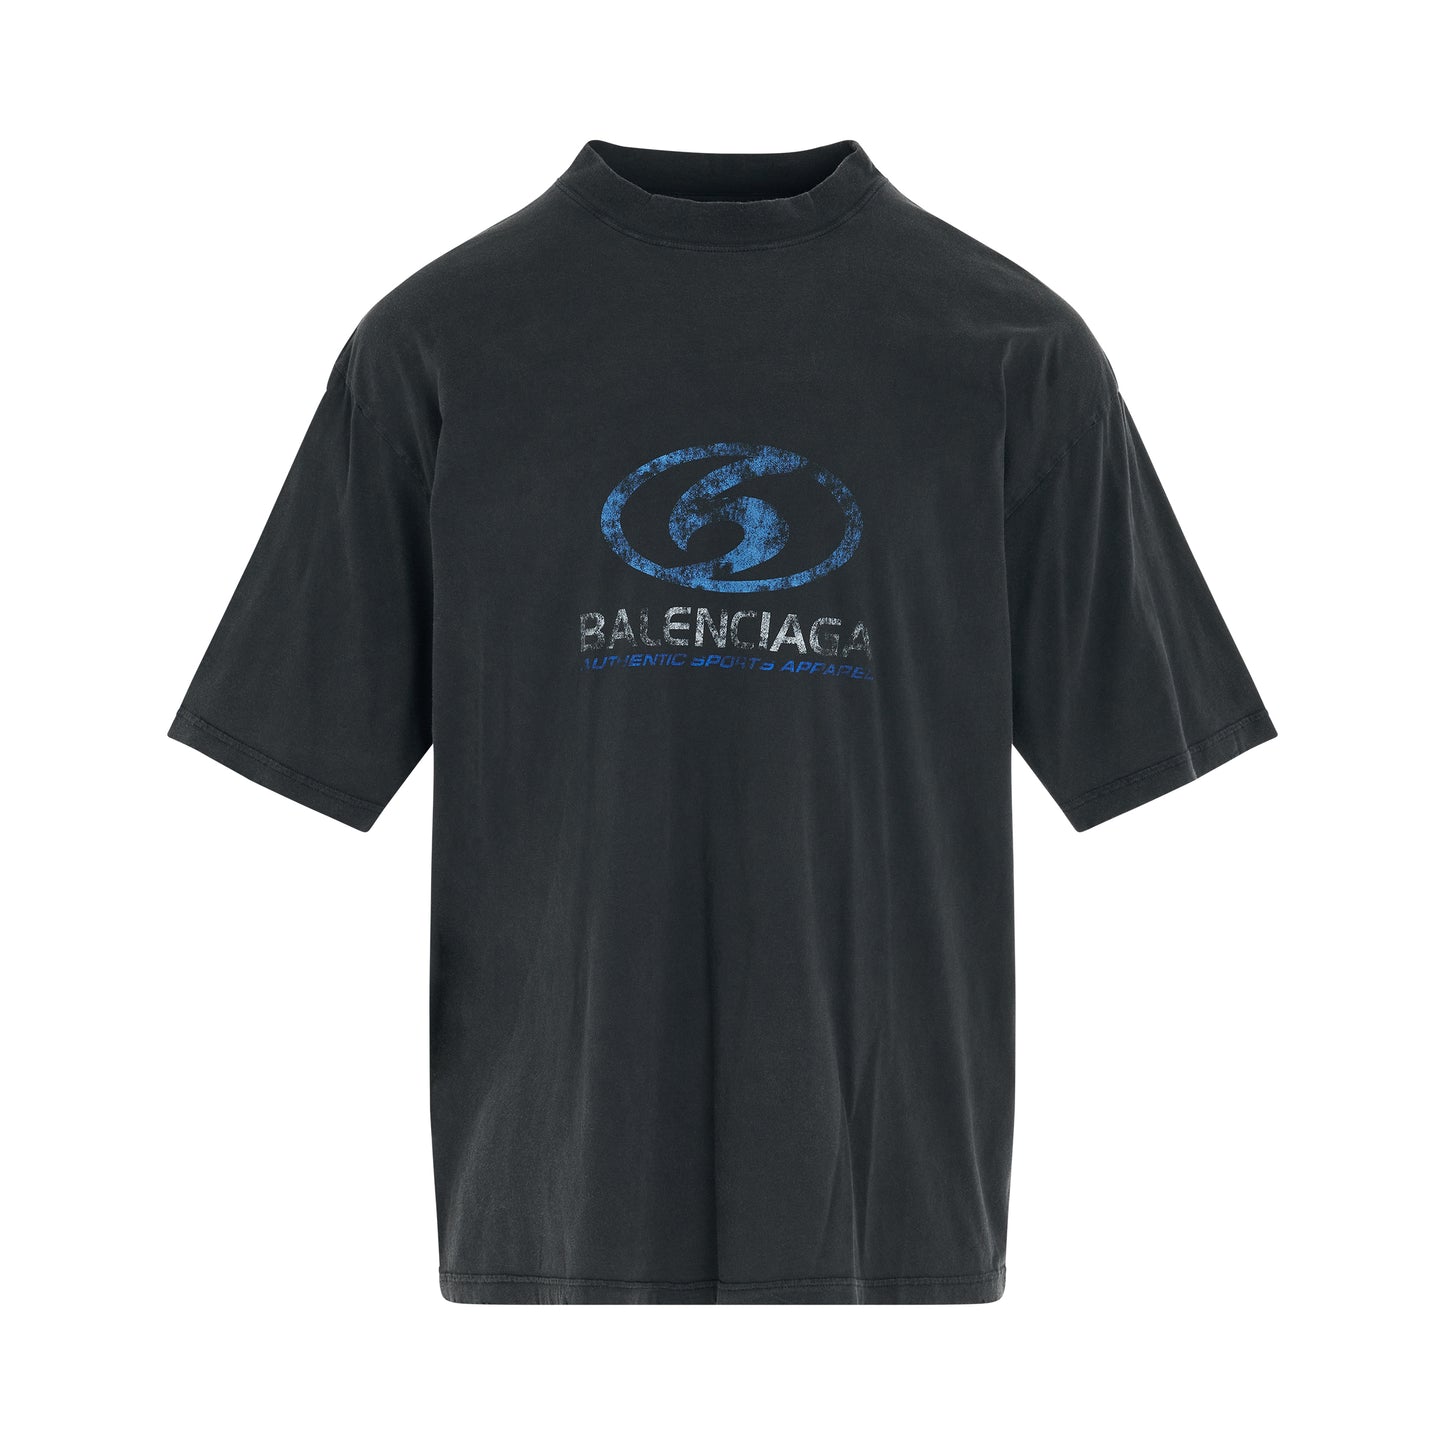 Surfer Logo T-Shirt in Faded Black/Blue